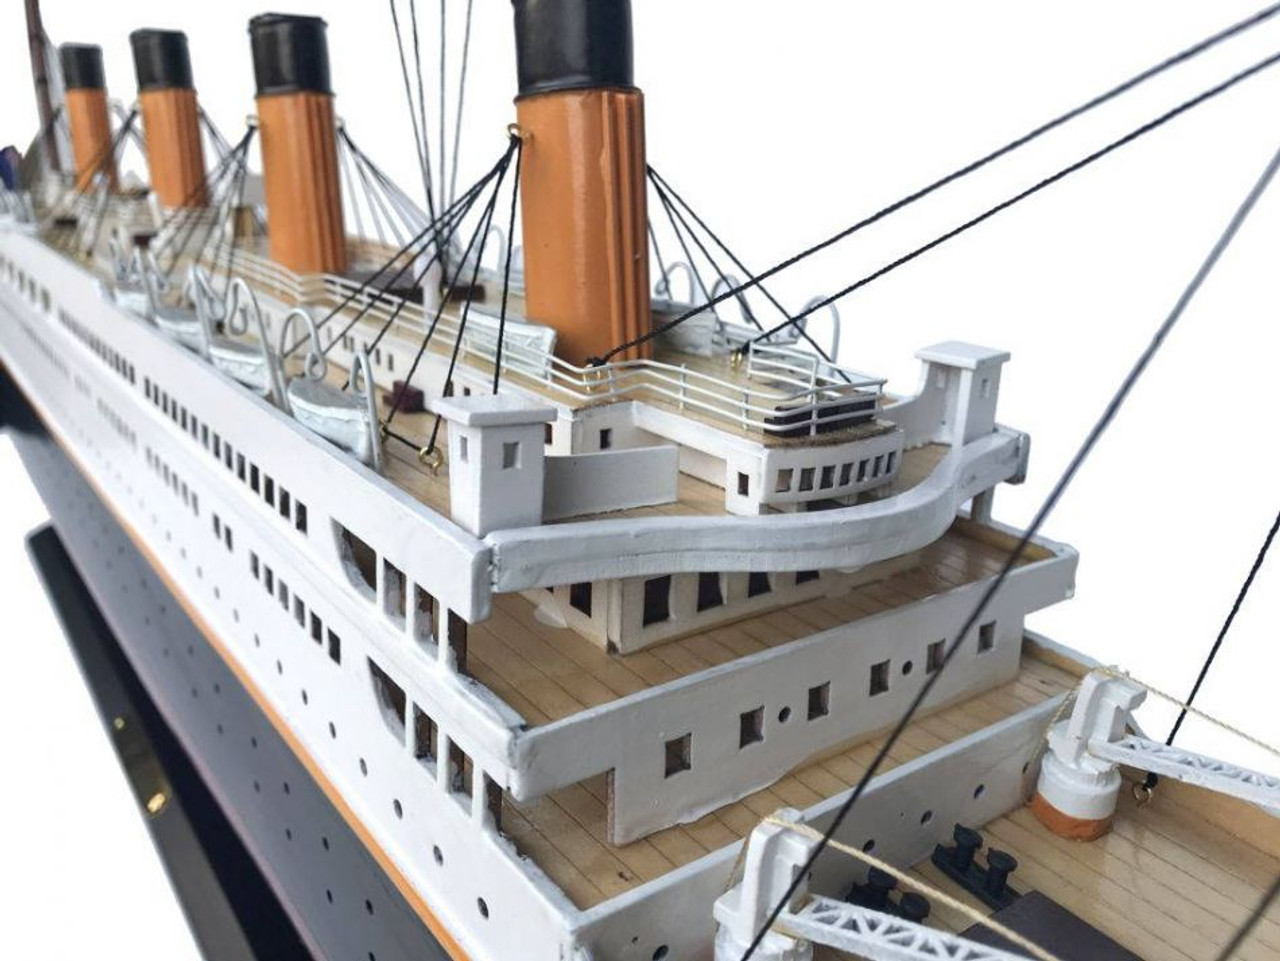 RMS Titanic Model Cruise Ship - 40"